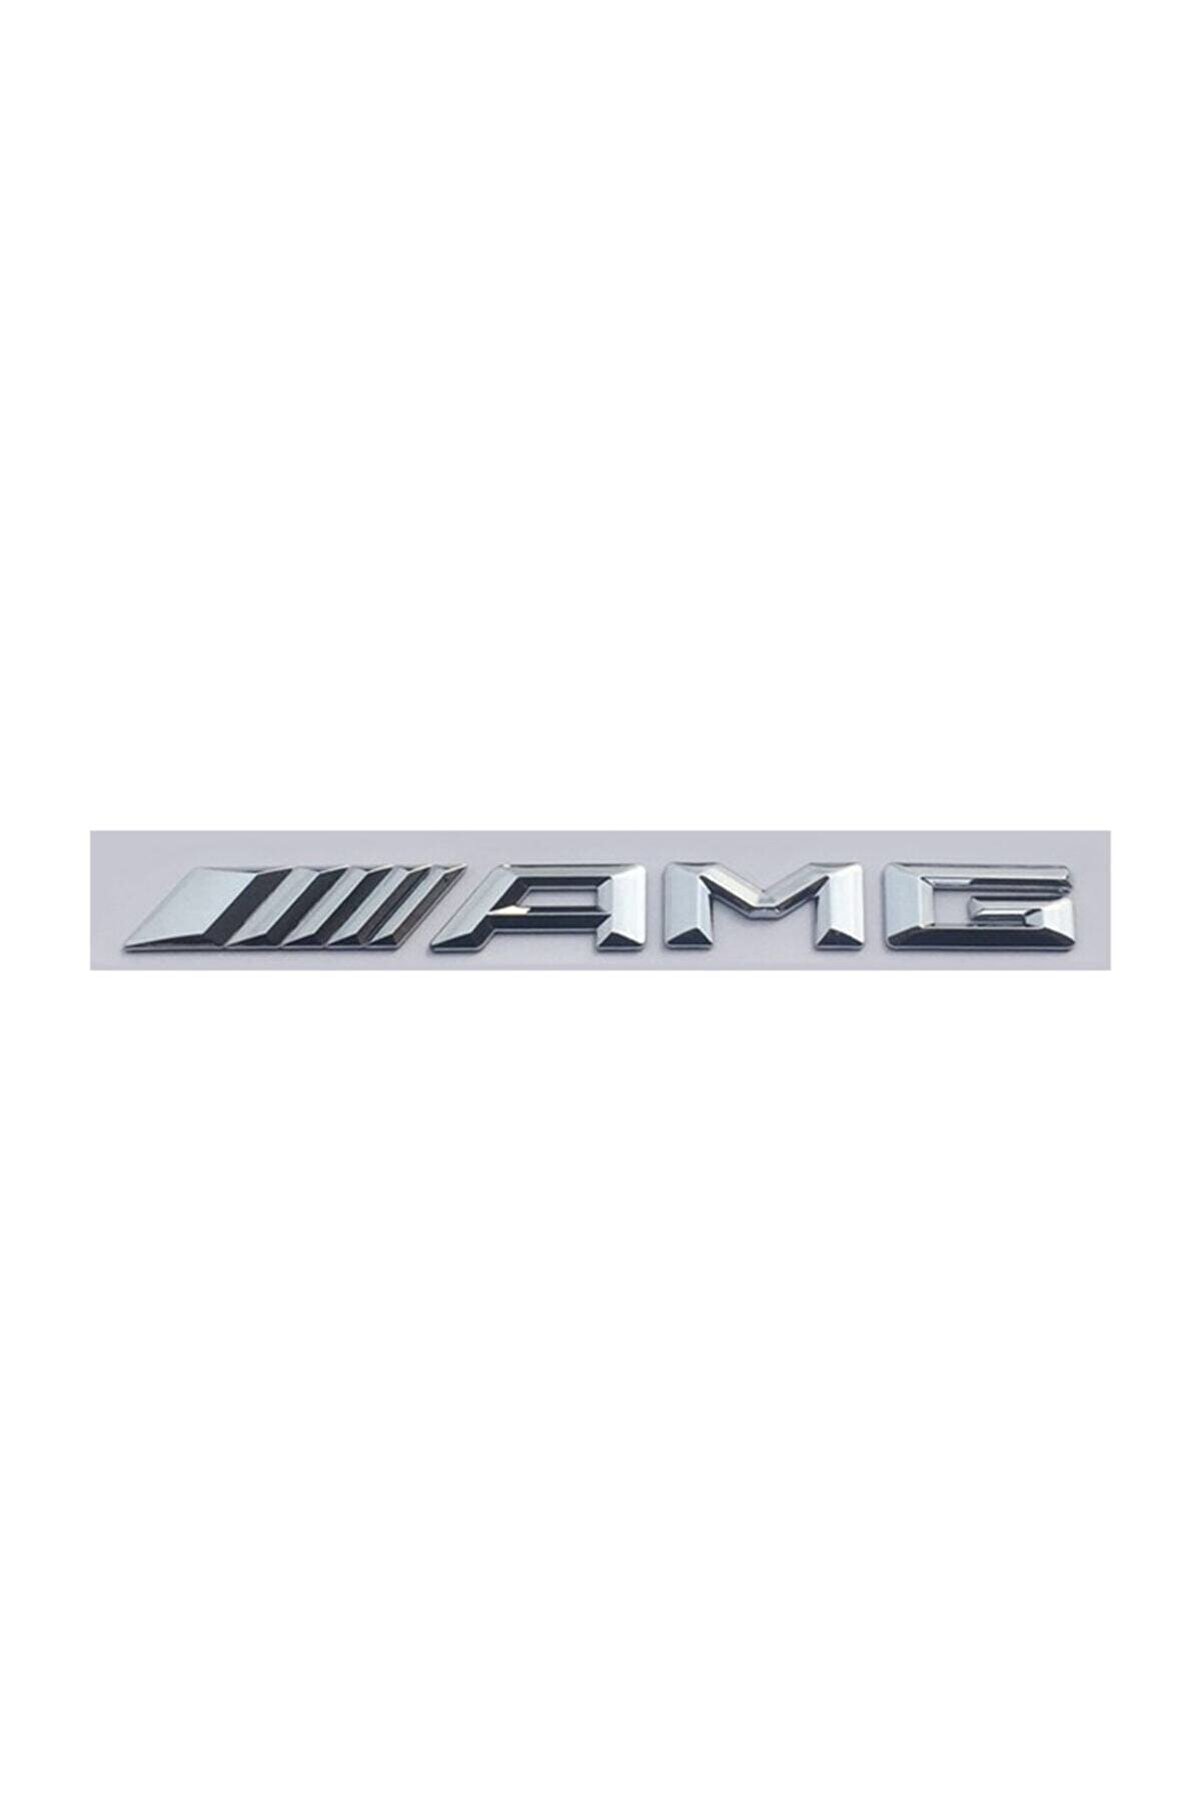 Şanlı Mercedes Amg Plastik Krom Arma Logo Sticker